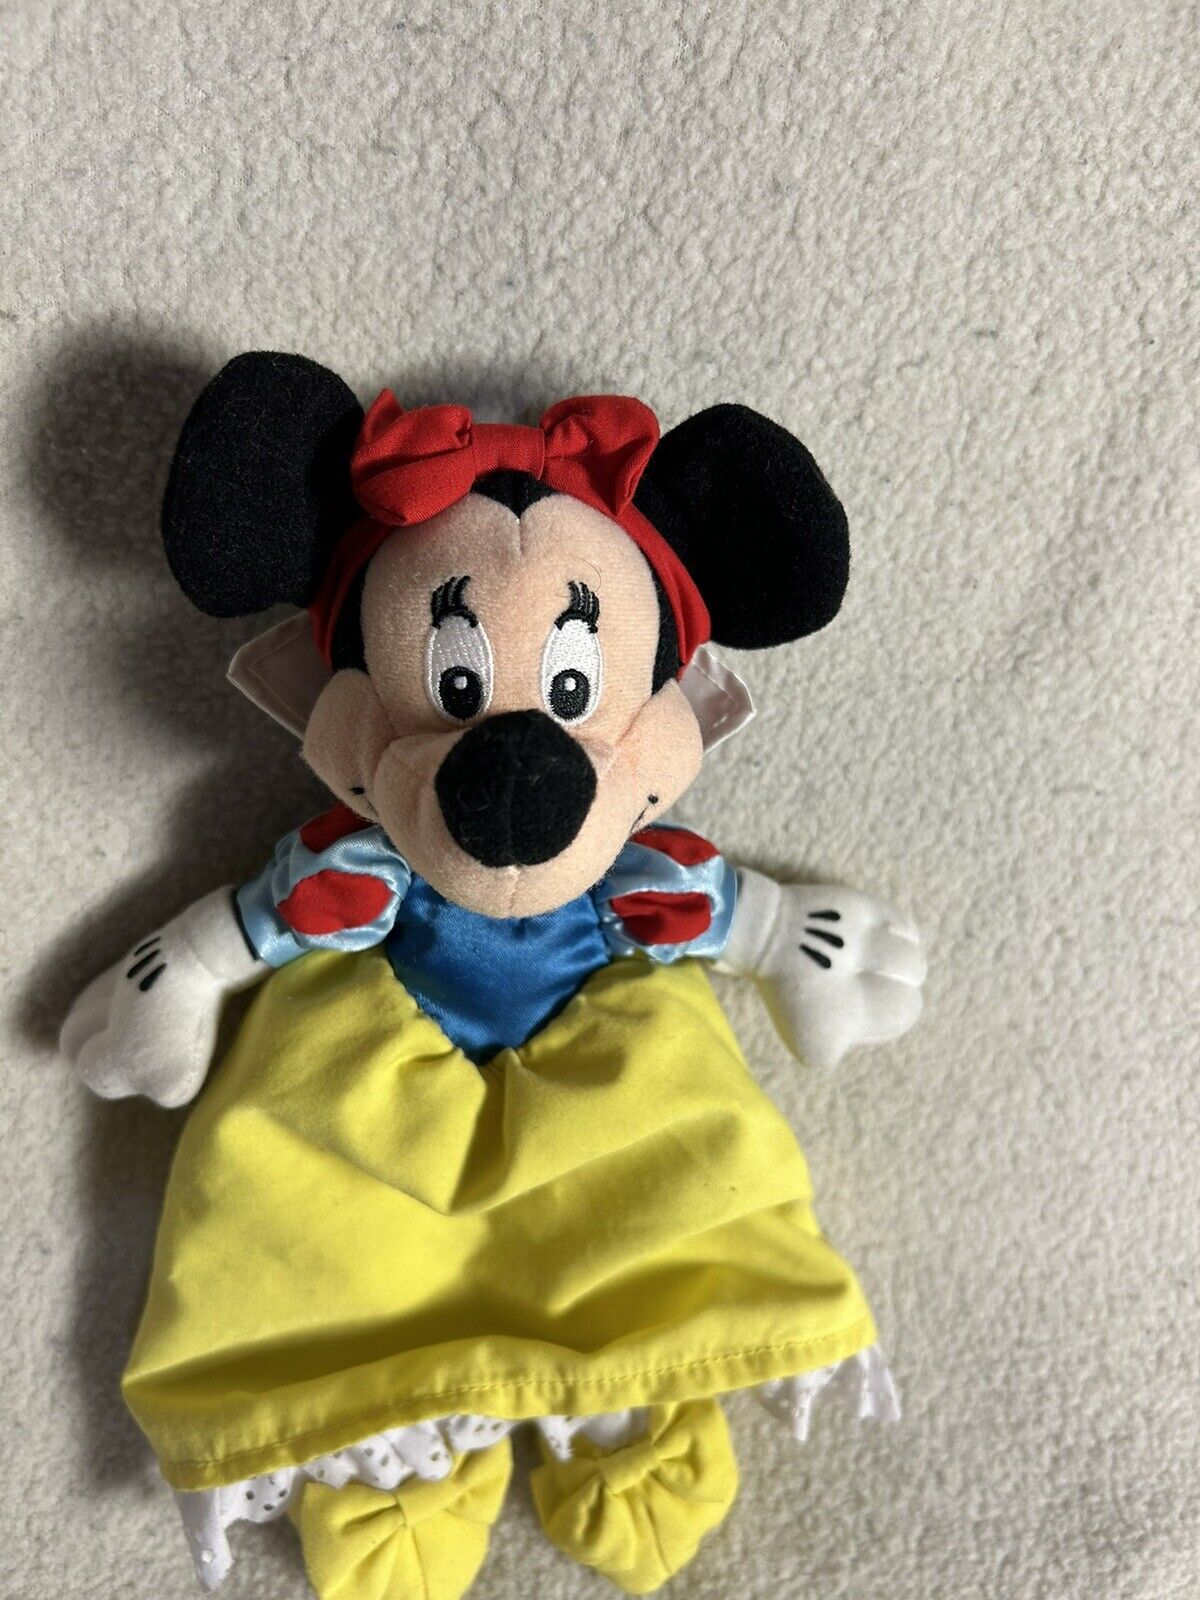 Minnie Mouse Snow White 9 Inch Disney Store Plush Stuffed Toy Princess